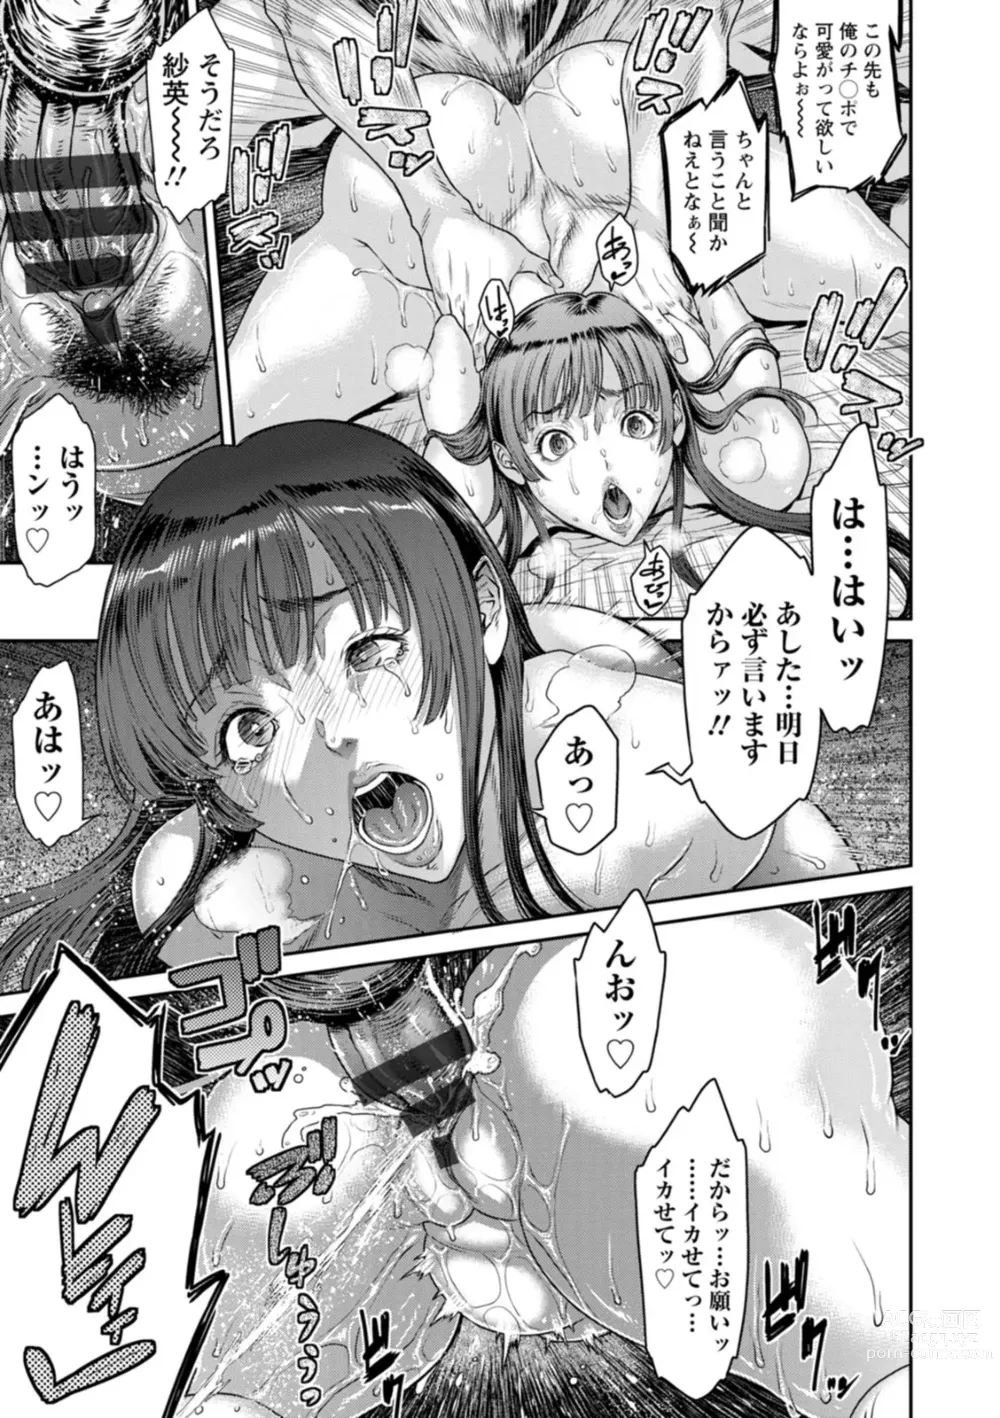 Page 181 of manga Obscene Box